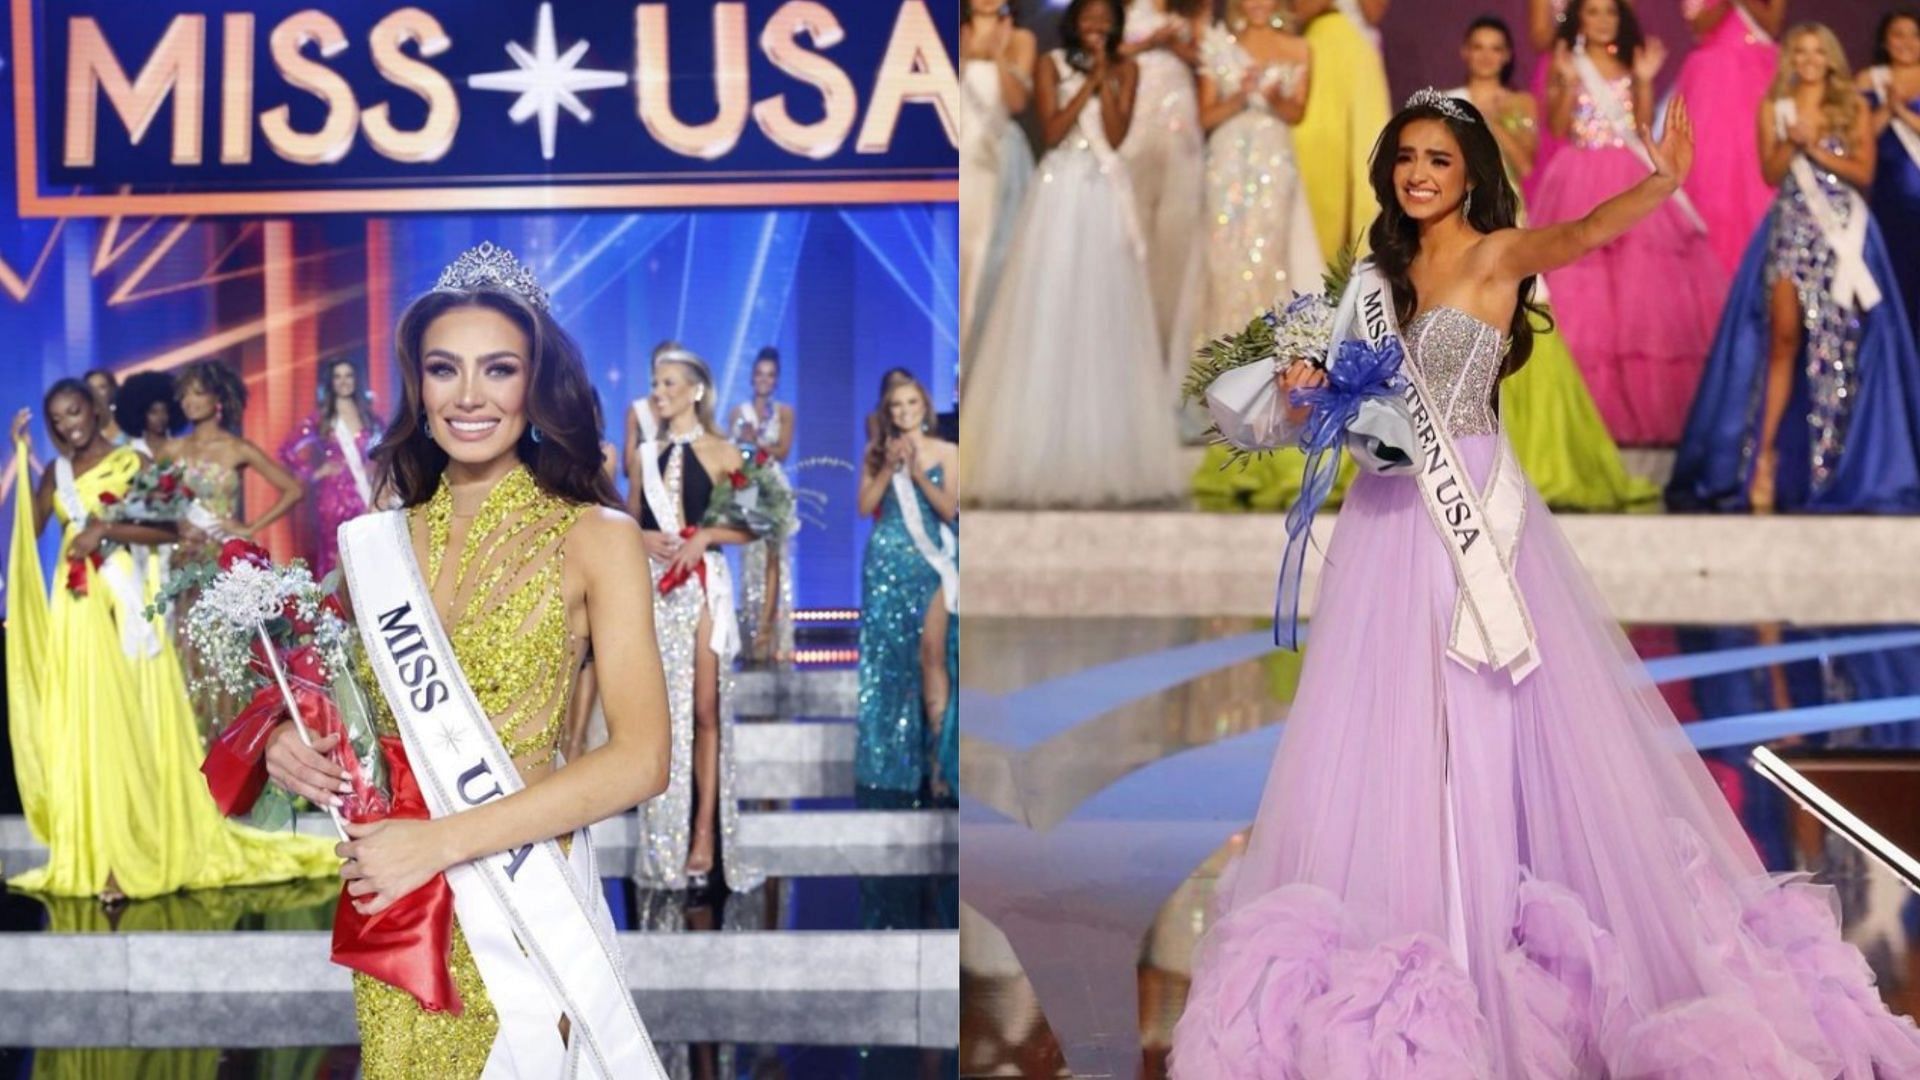 Noelia Voigt and UmaSofia Srivastava during their winning moments at Miss USA 2023 and Miss Teen USA 2023 respectively. (Image via Instagram/ noeliavoigt/ umasofias)